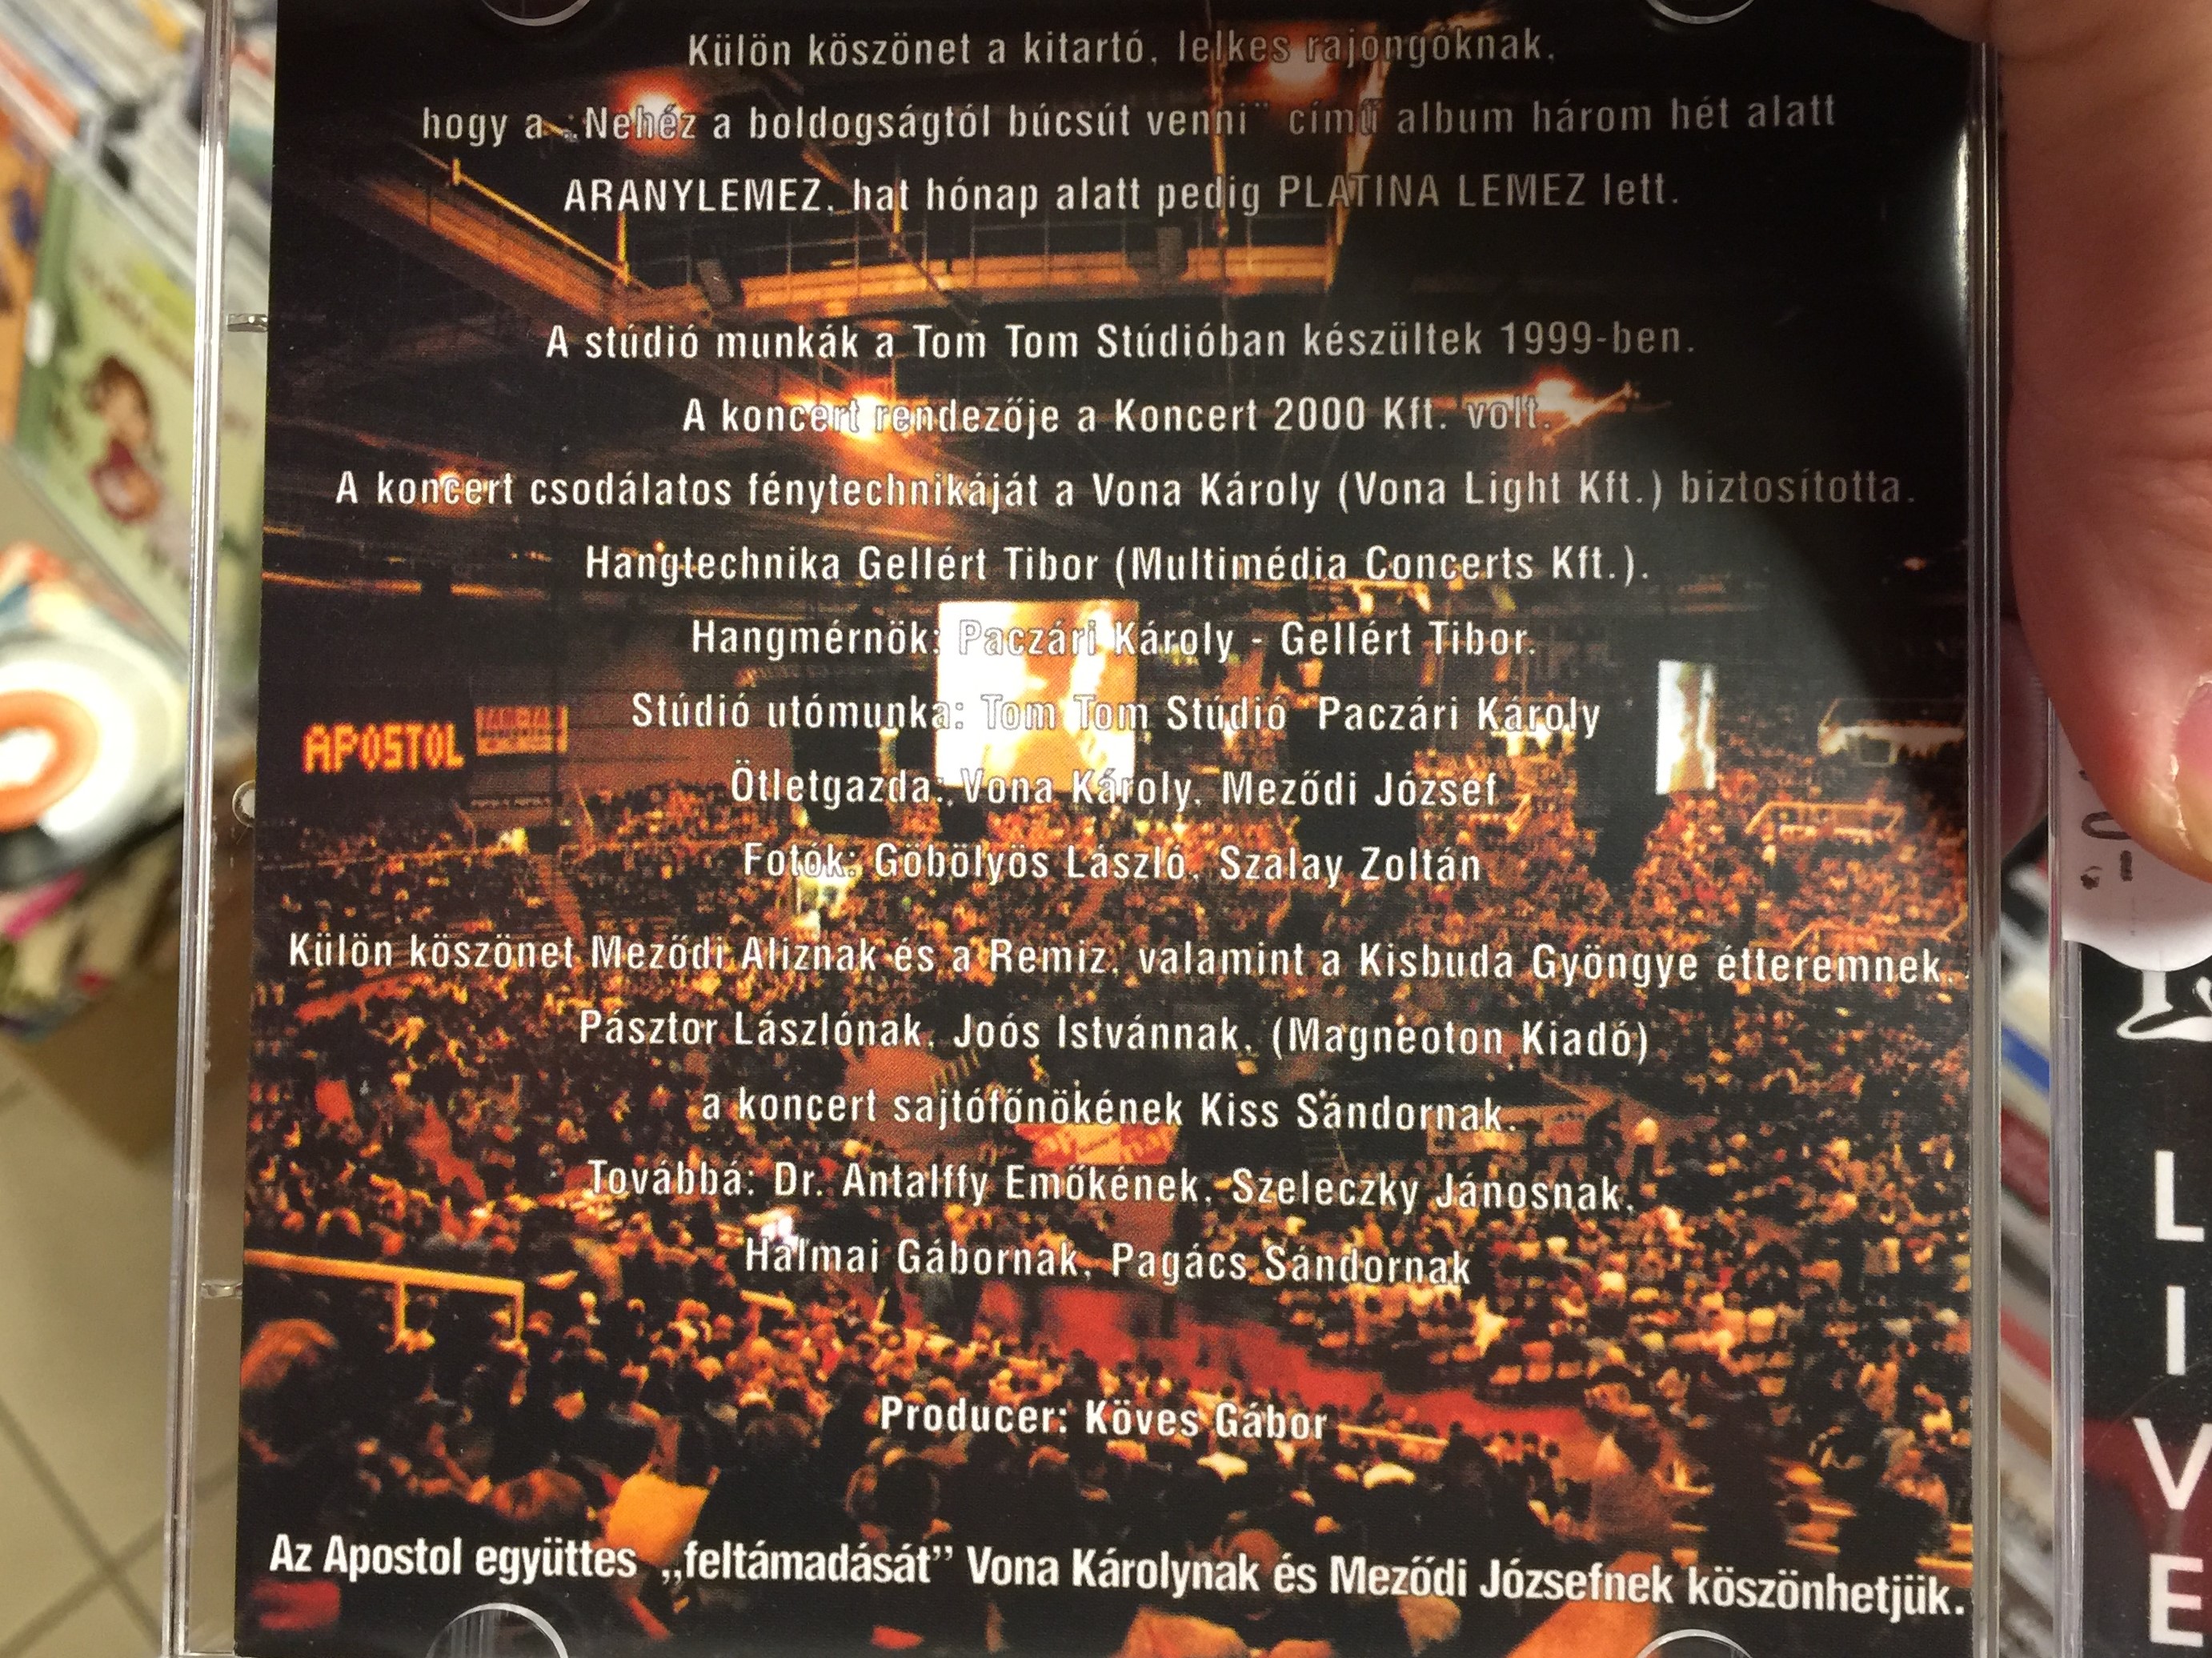 -apostol-koncertalbum-budapest-sportcsarnok-3.jpg